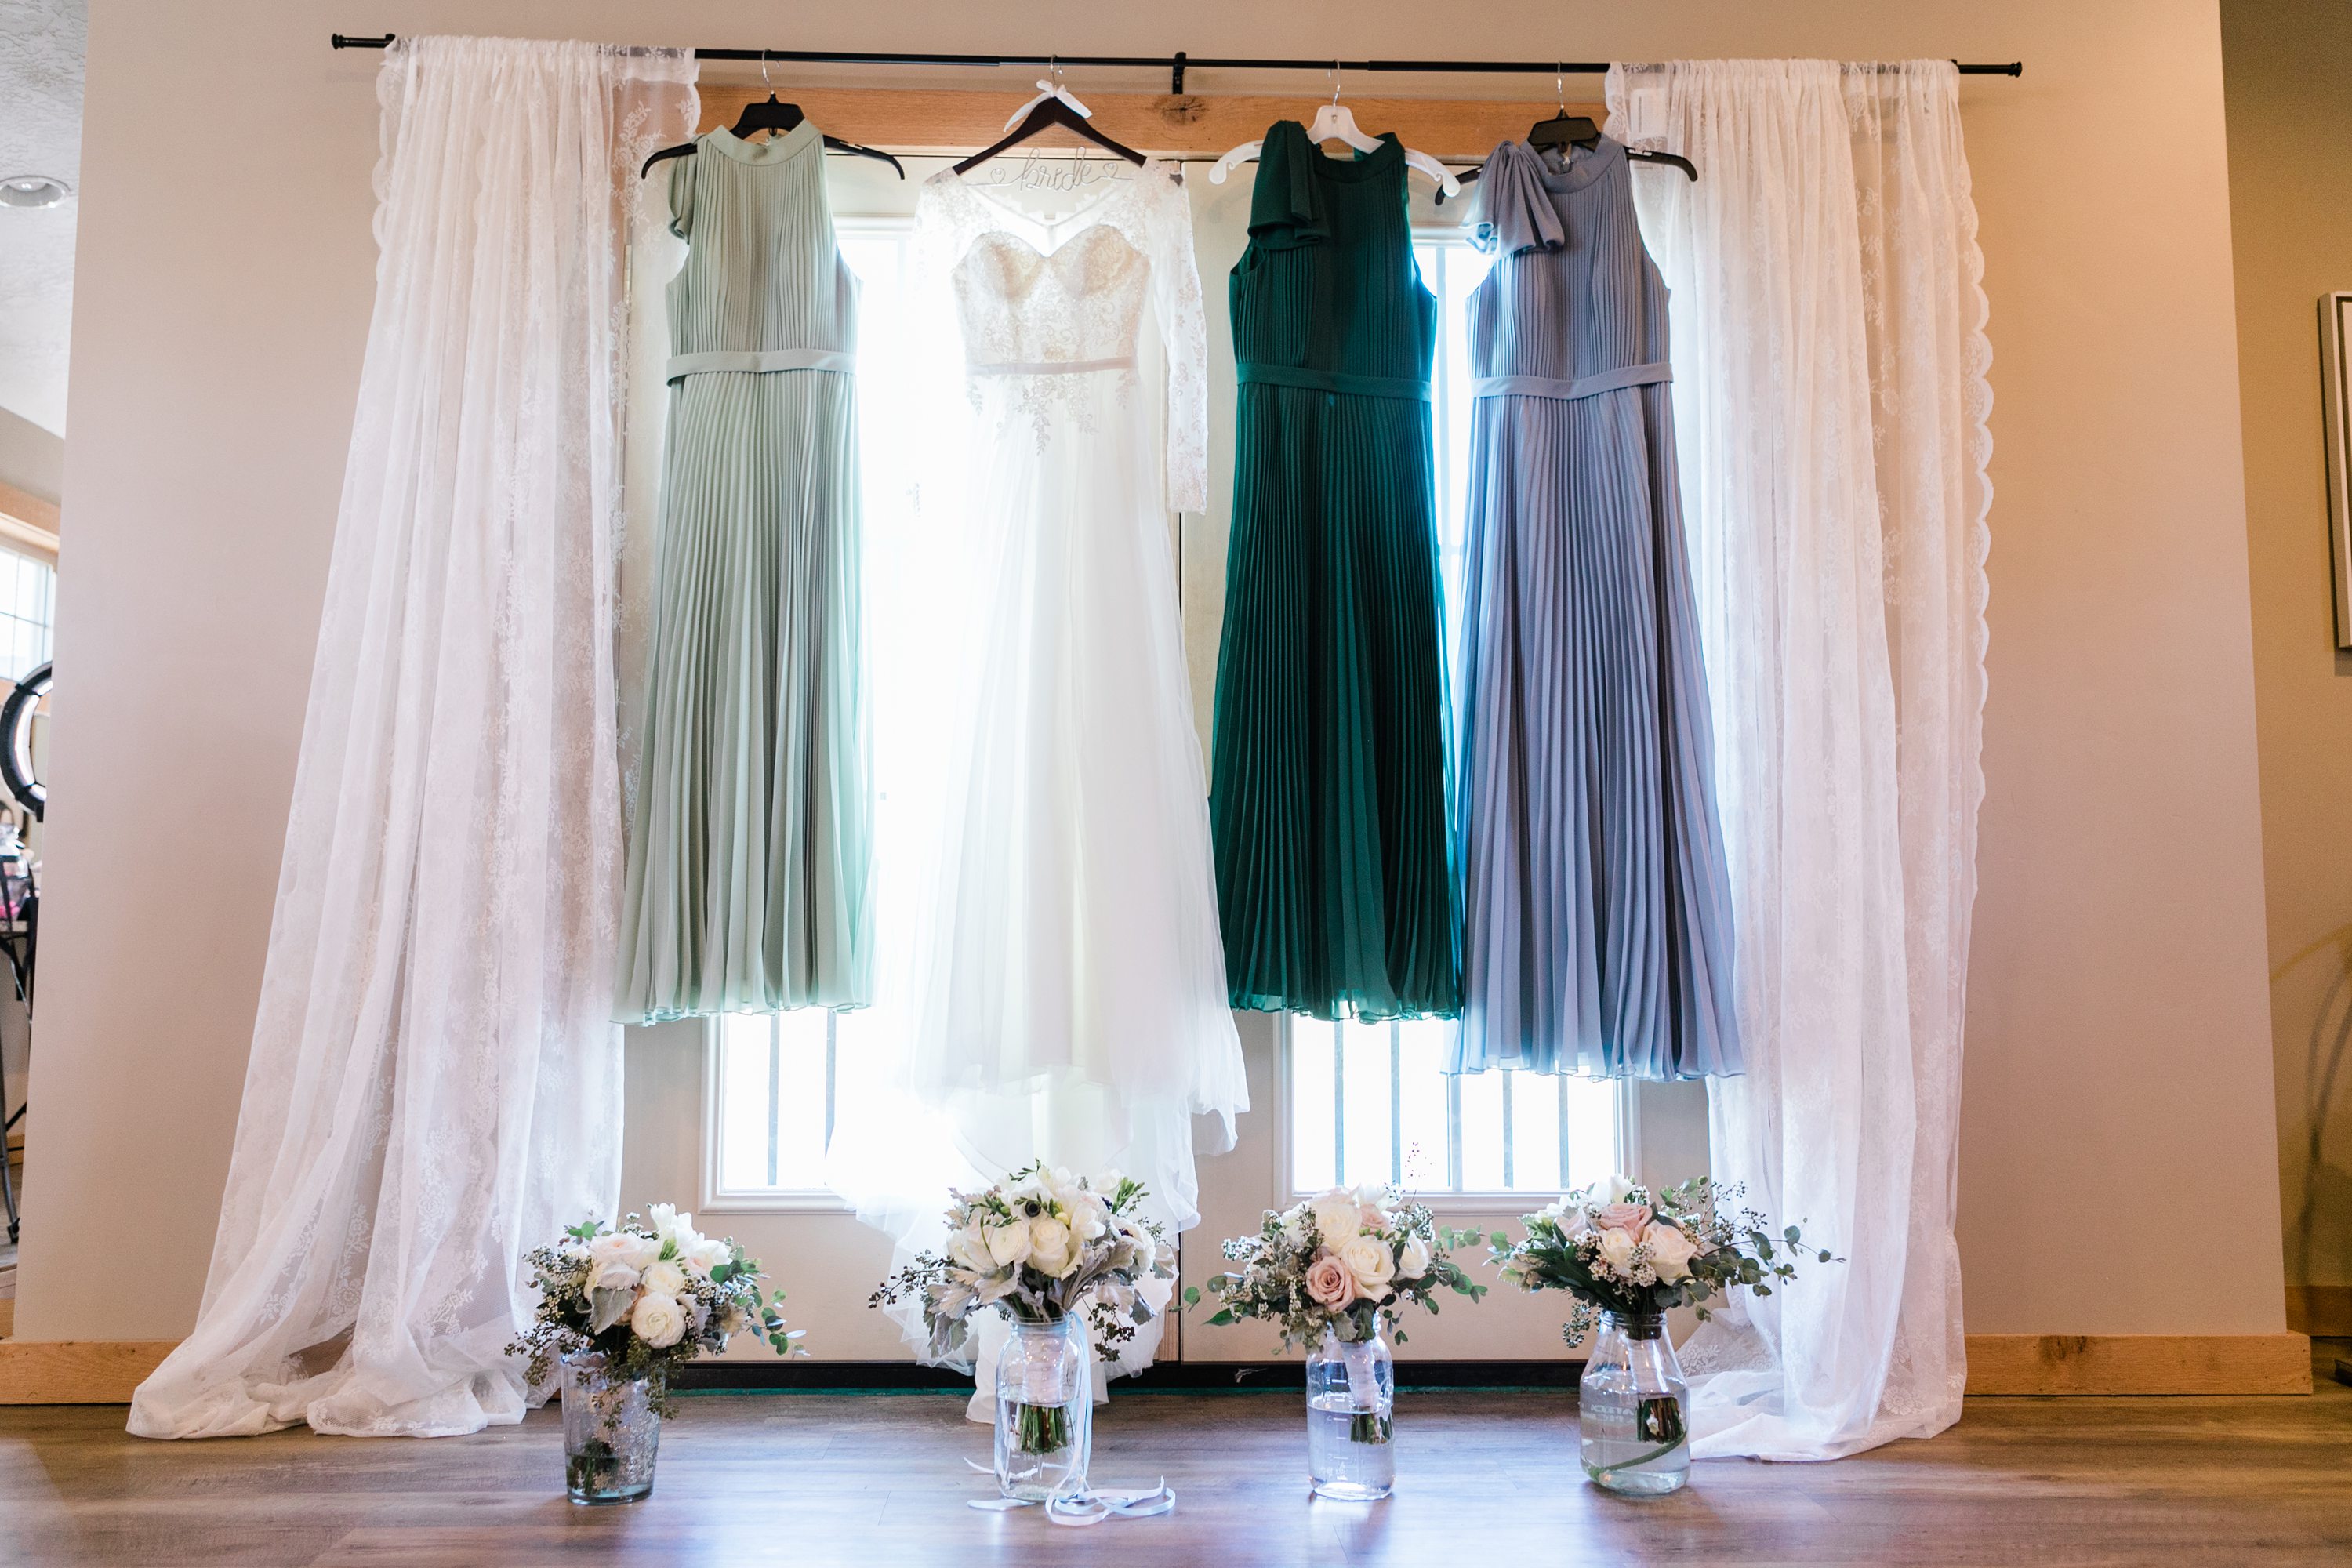 bridal party dresses,wedding venues,wedding gown details